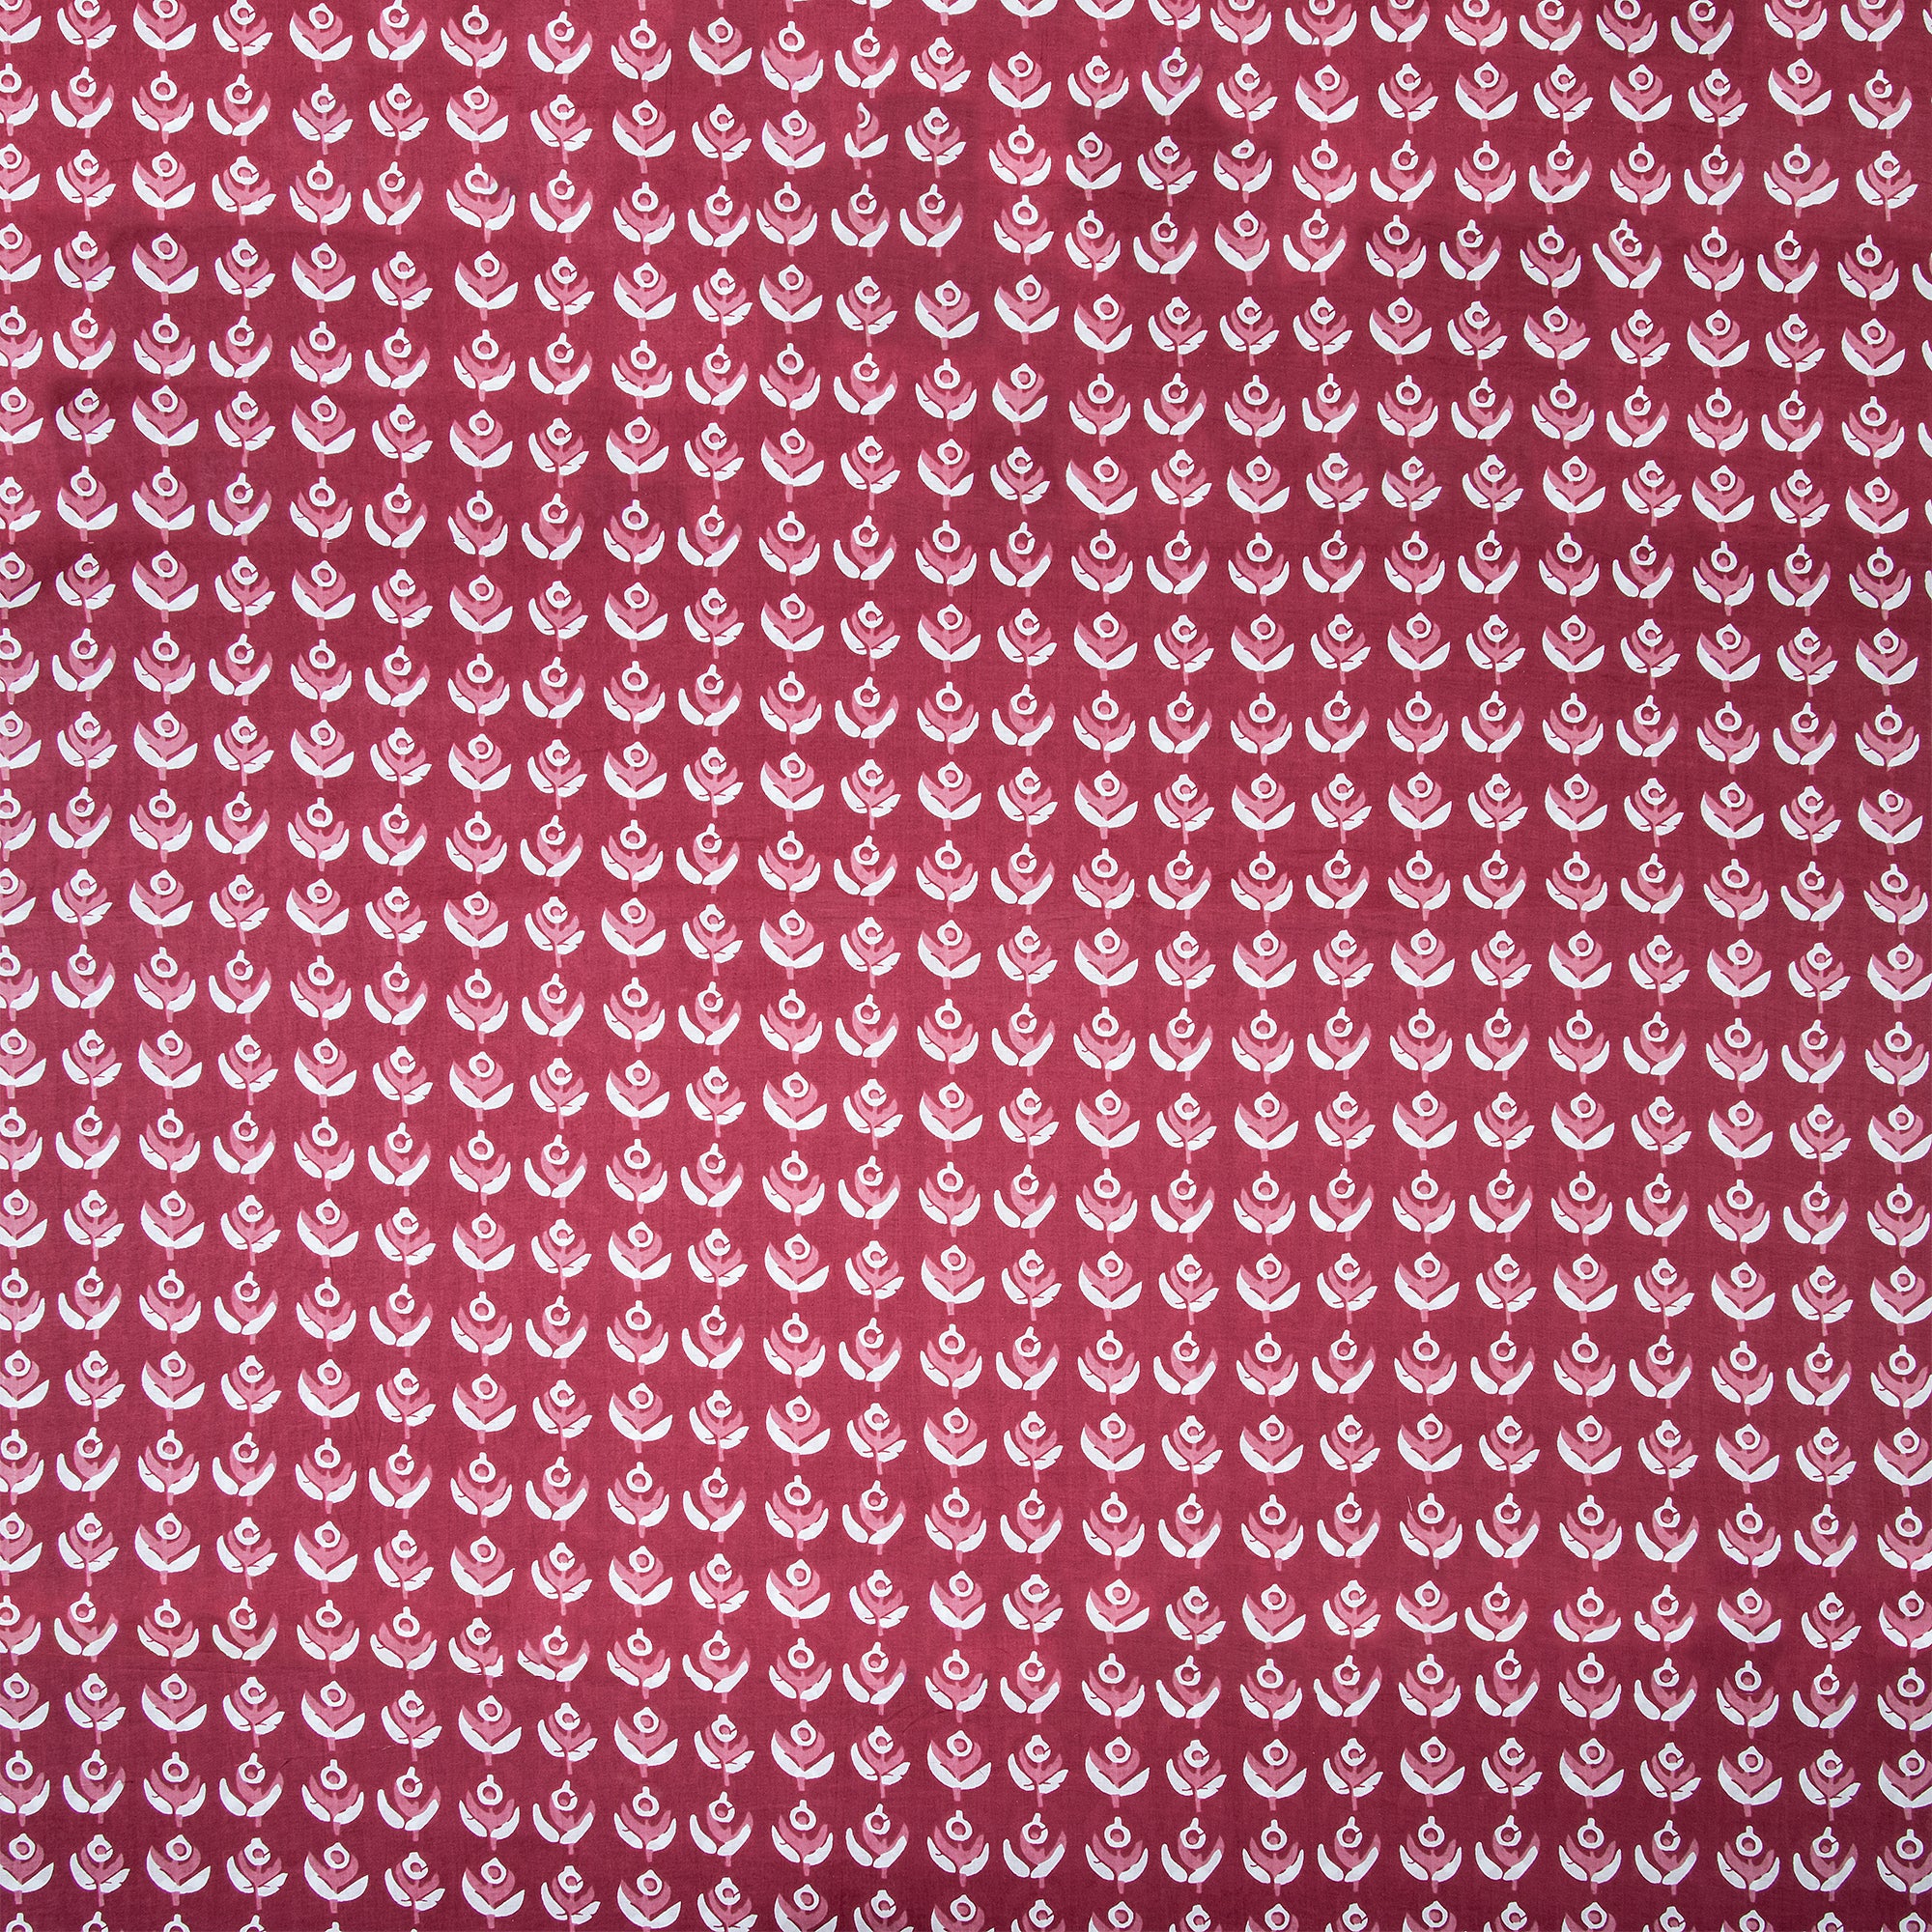 Sea Fan Cotton Block Print Fabric